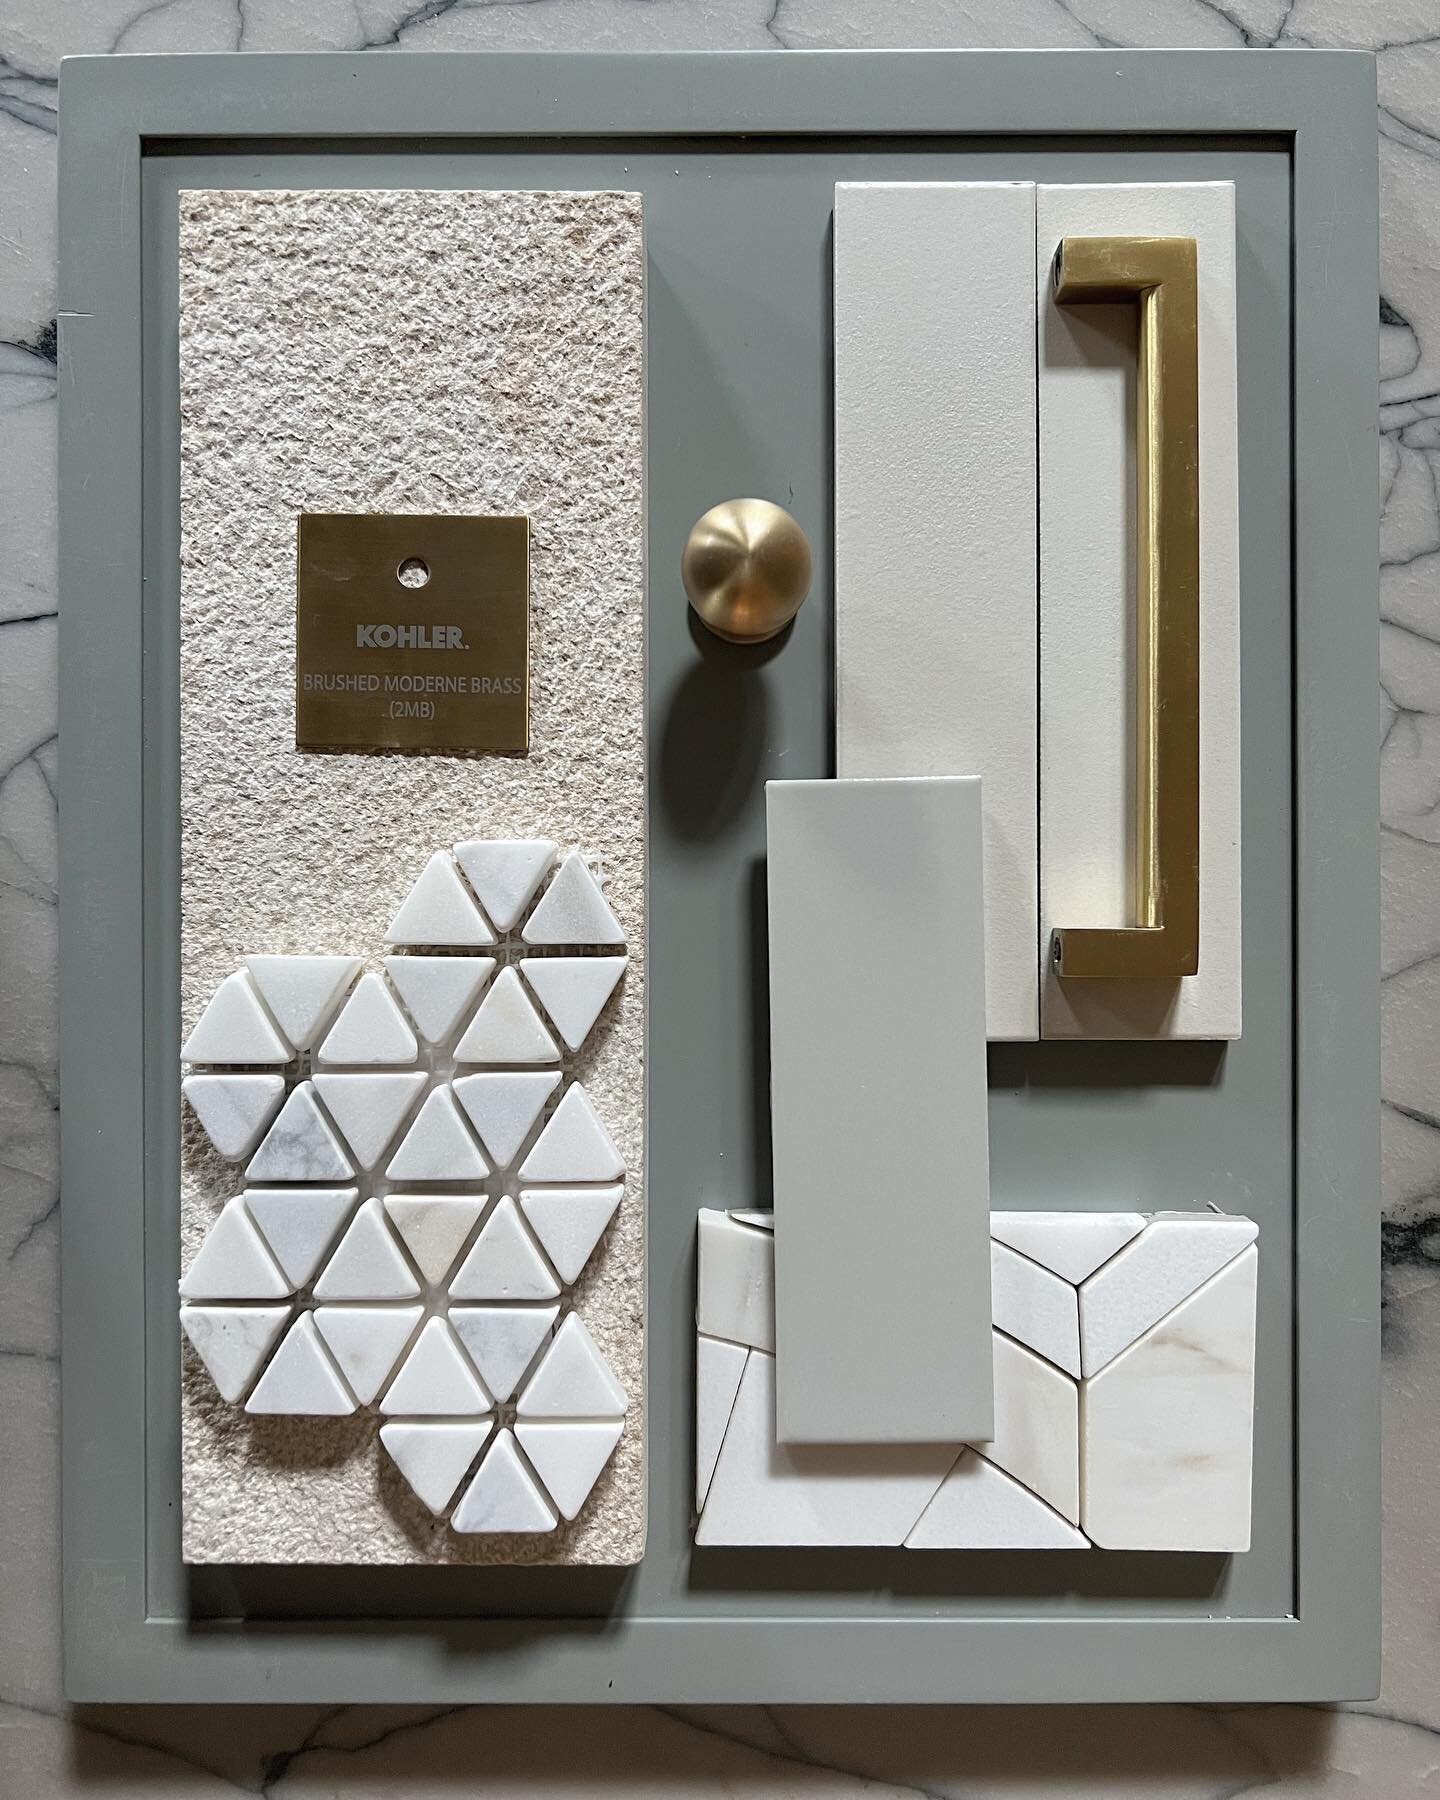 Some fun finishes for some much needed updates! ###

#interiordesign #bathroomdesign #bathroomremodel #tile #marble #organicmodern #spabathroom